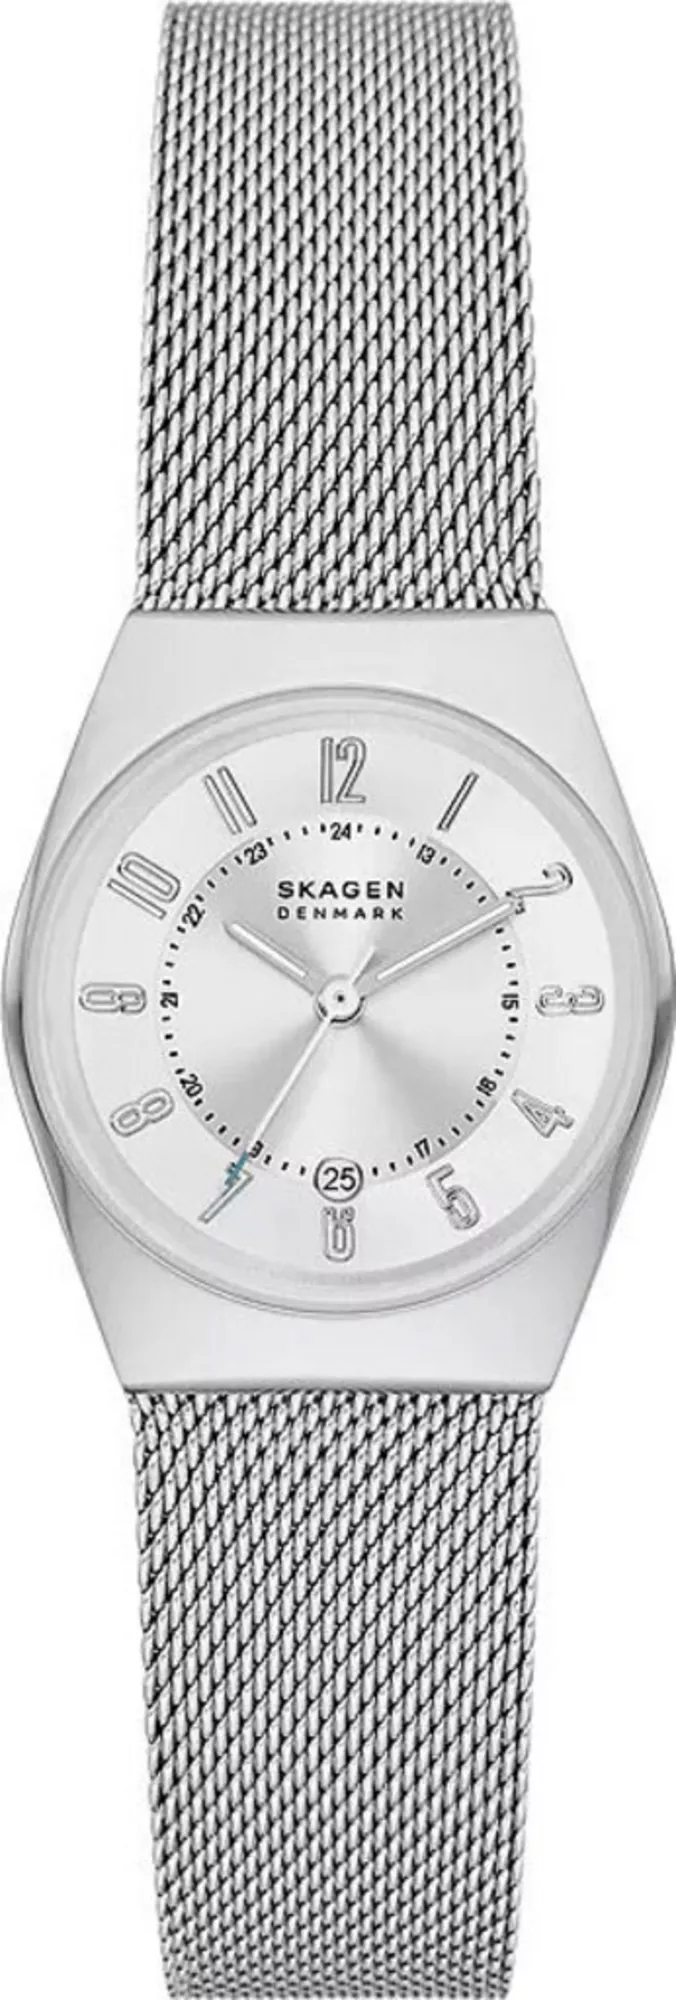 Часы Skagen SKW3038